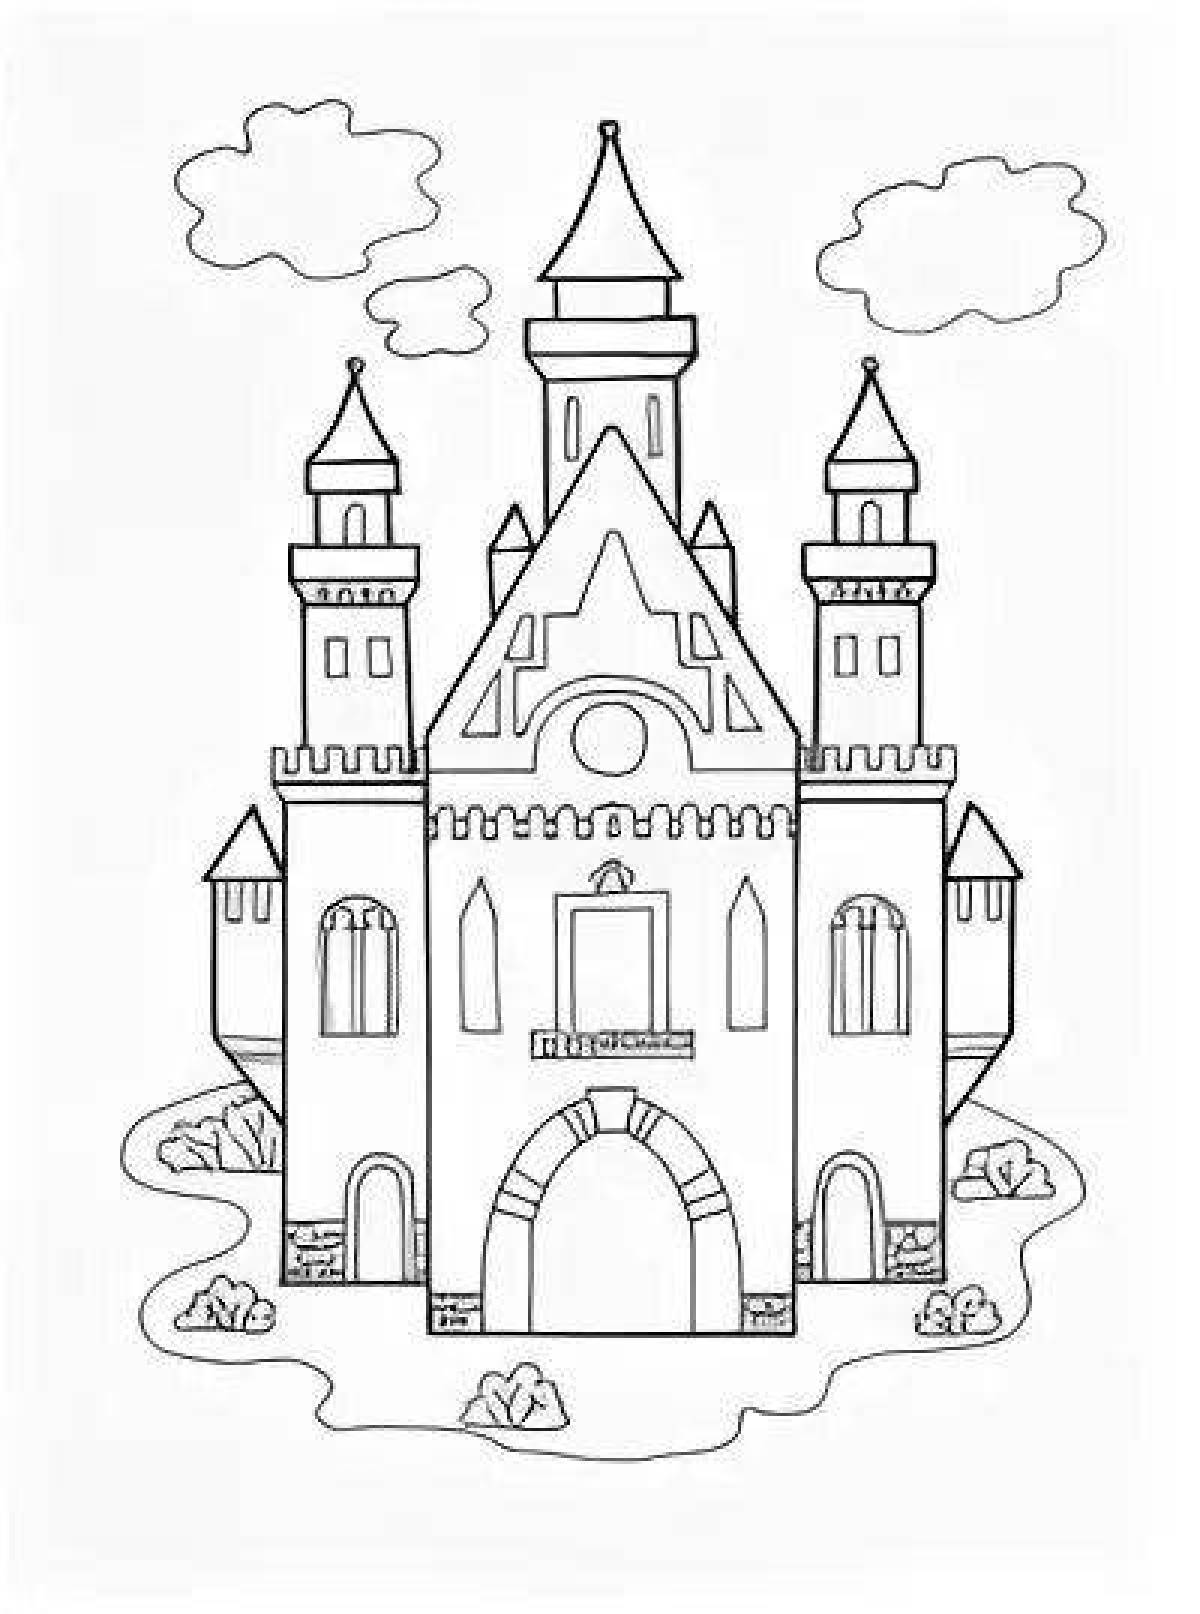 Fairytale palace in prep #3